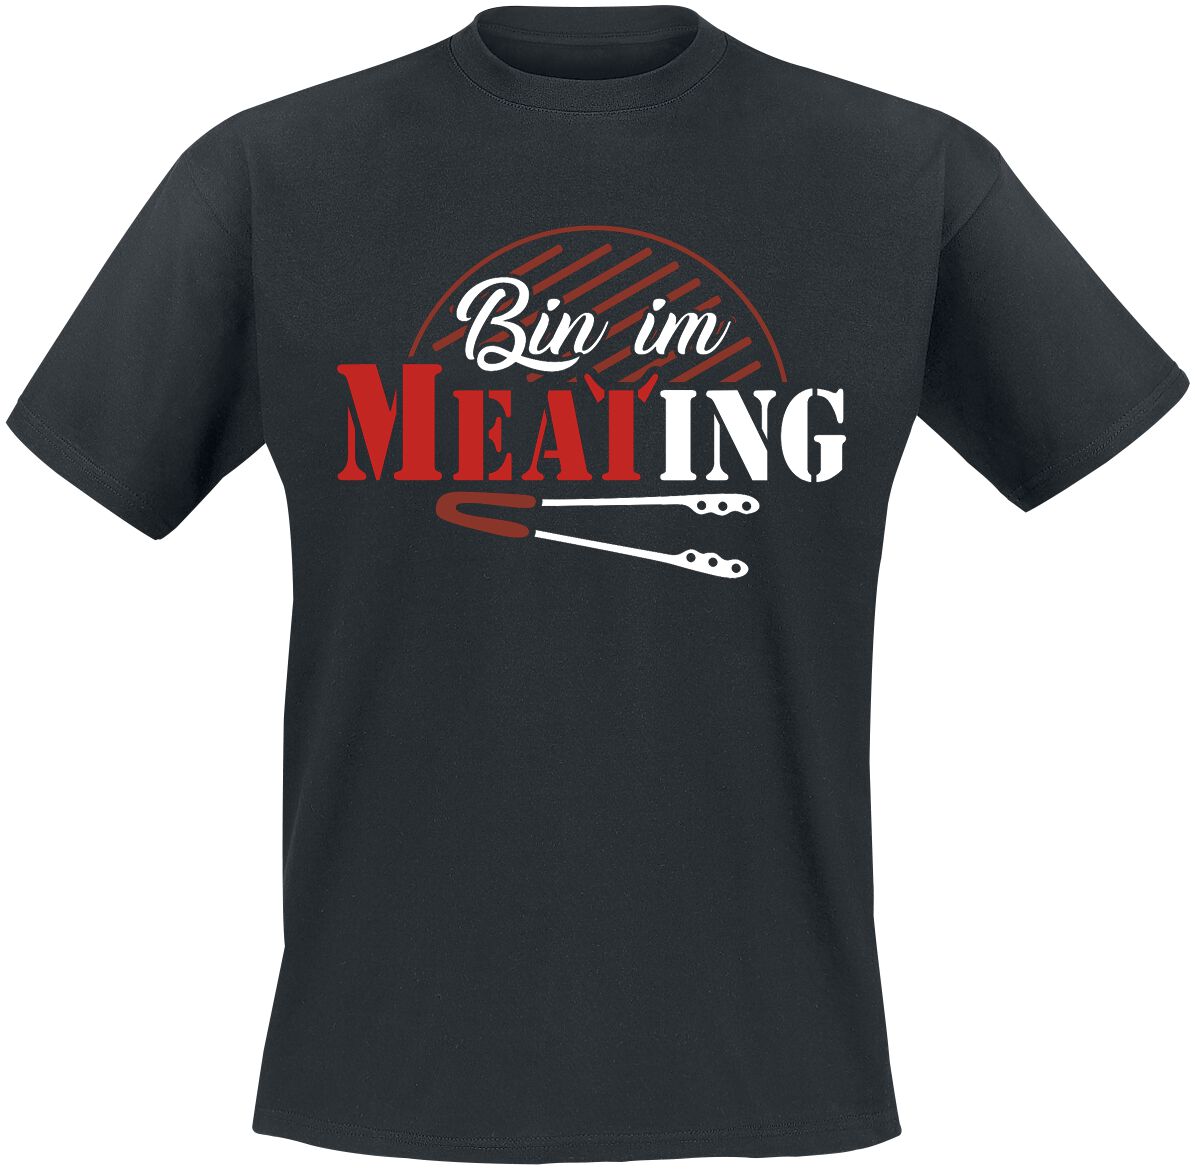 Food Bin im Meating T-Shirt schwarz in 5XL